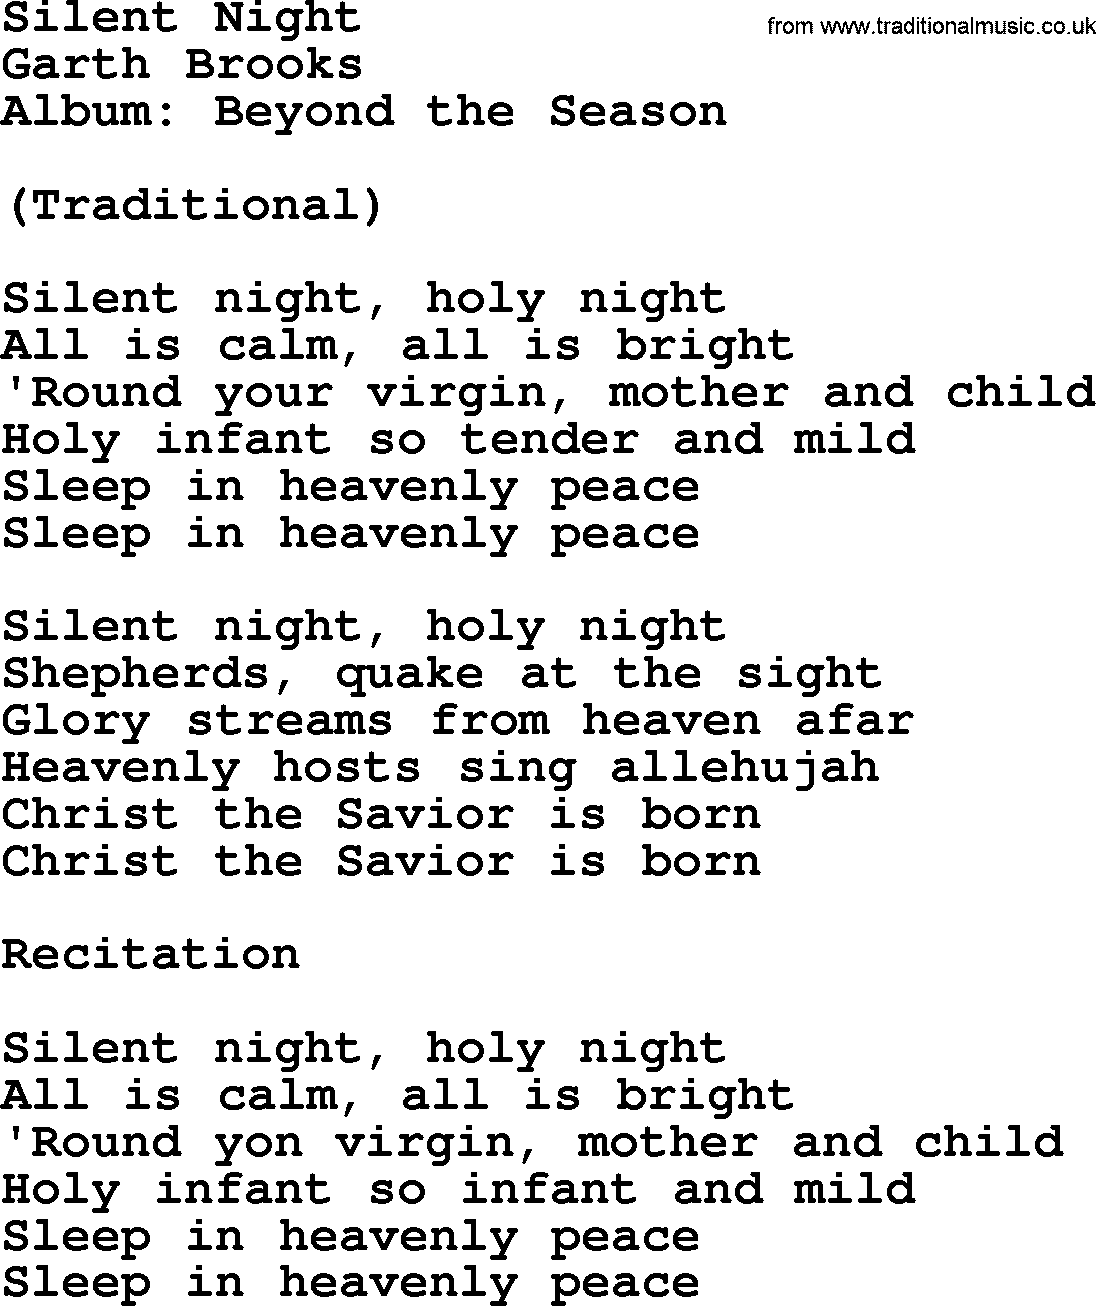 Garth Brooks song: Silent Night, lyrics